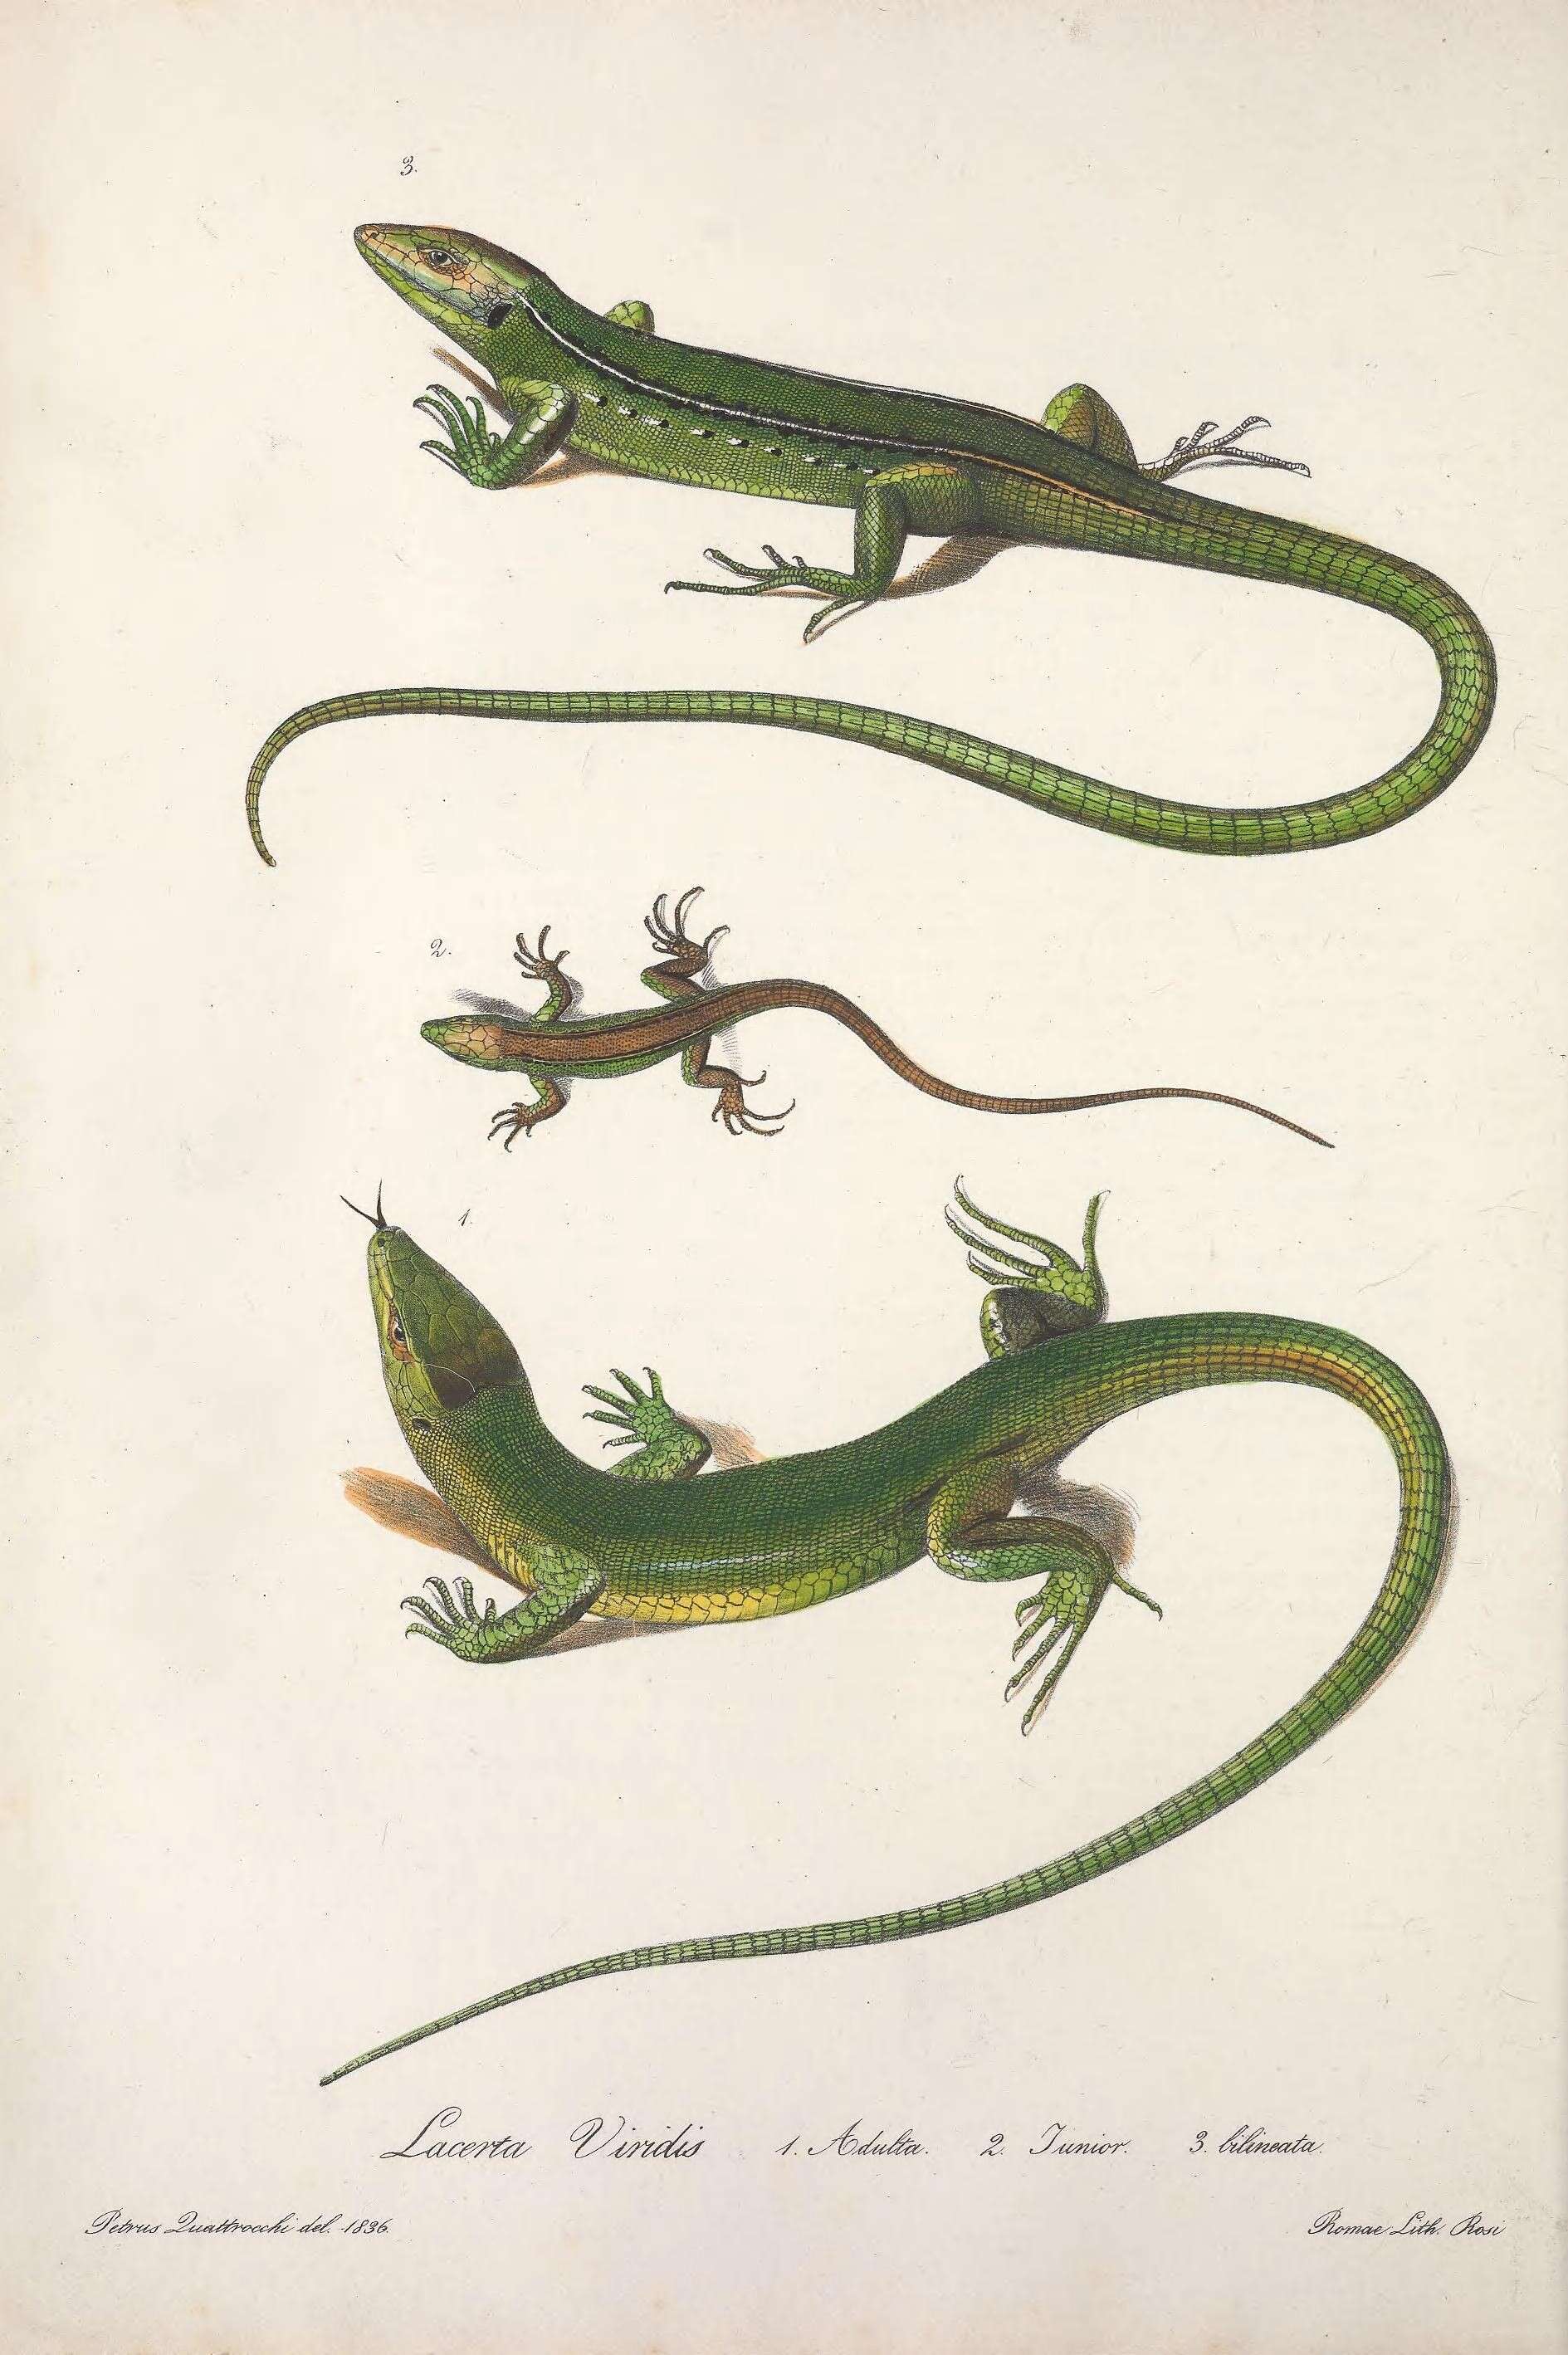 Image of green lizard